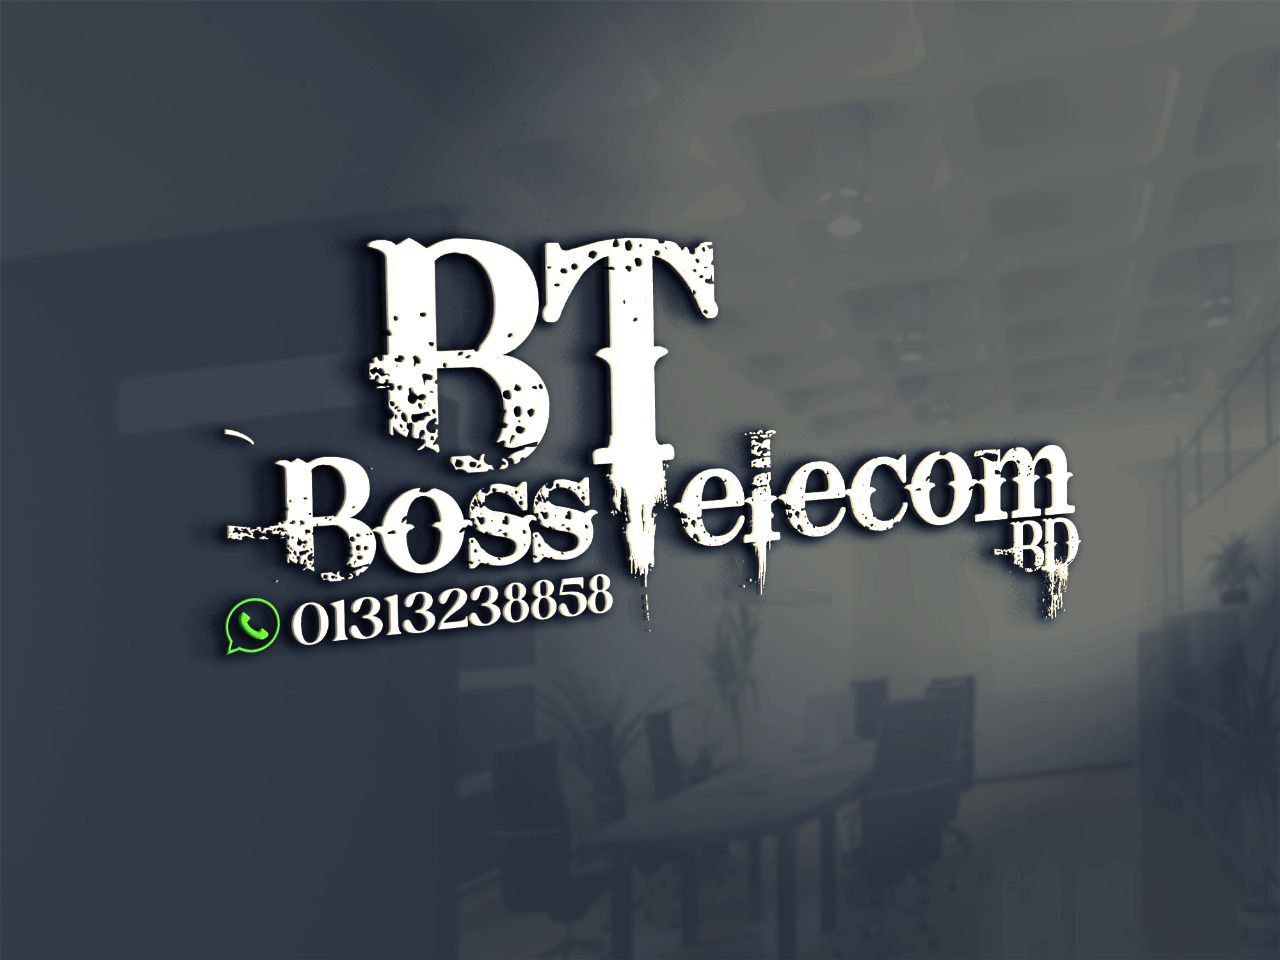 Boss Telecom BD